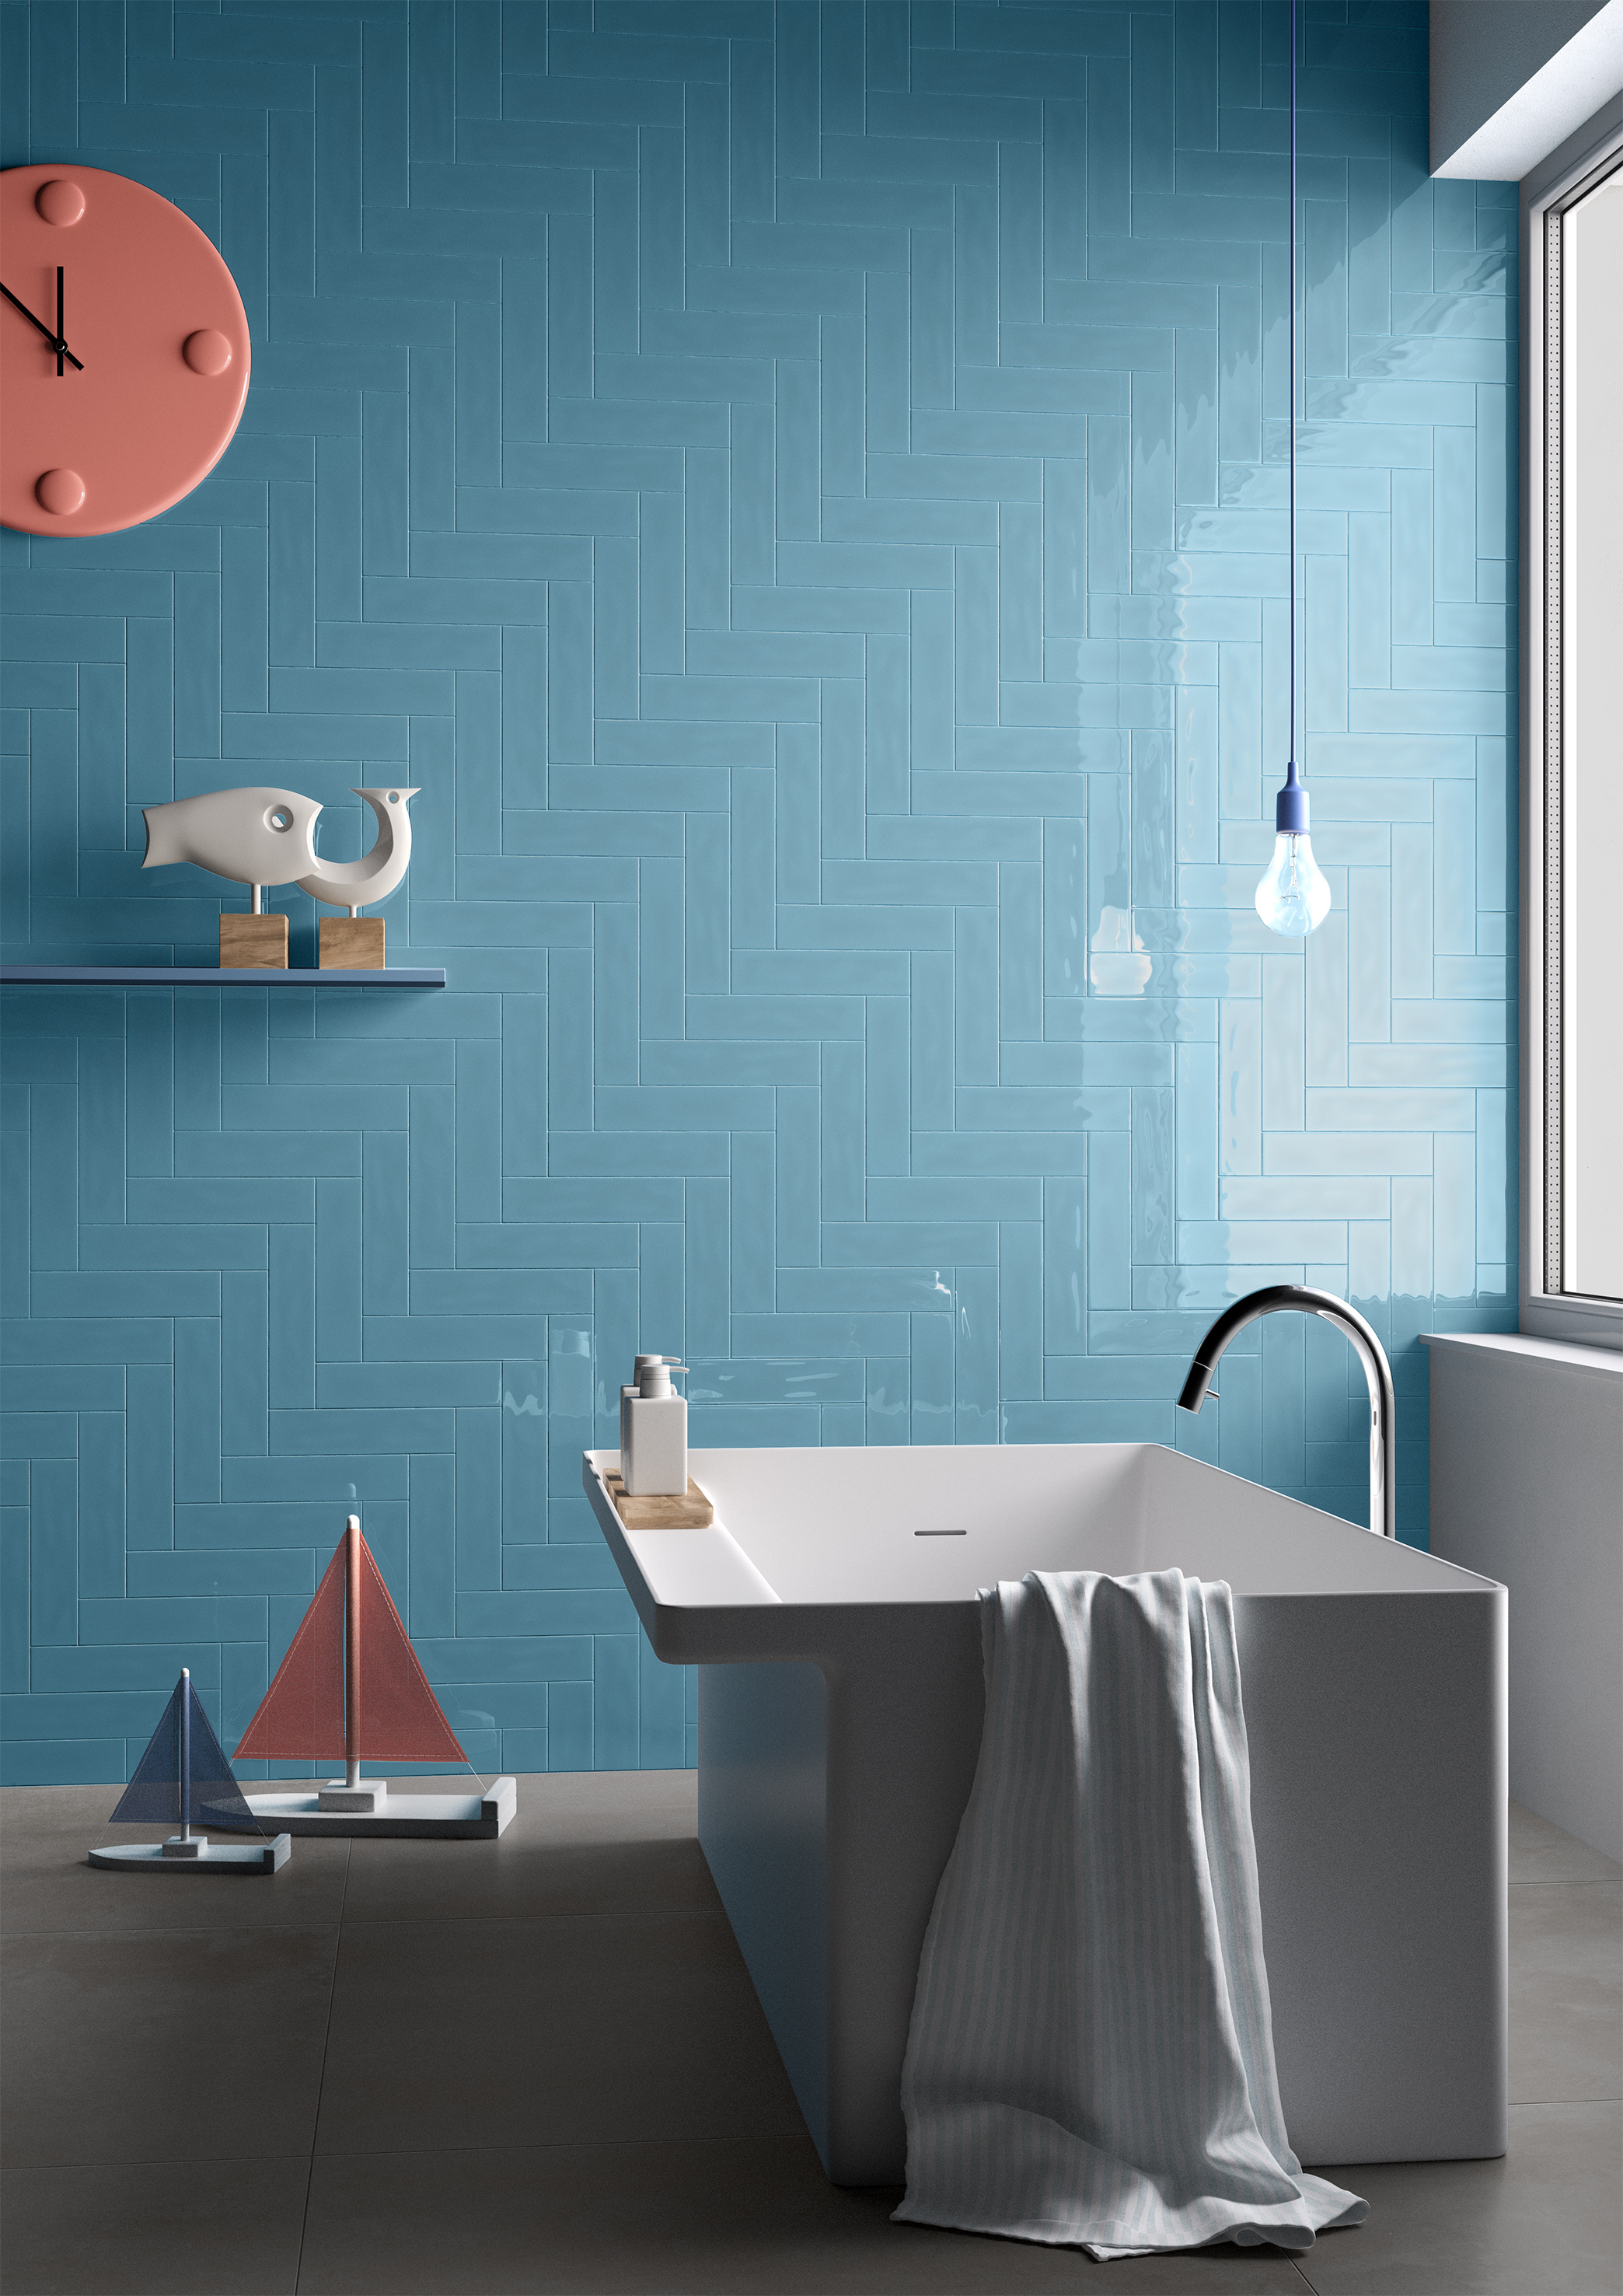 Blue tiled statement wall with minimalist, sleek bathtub and single hanging bulb